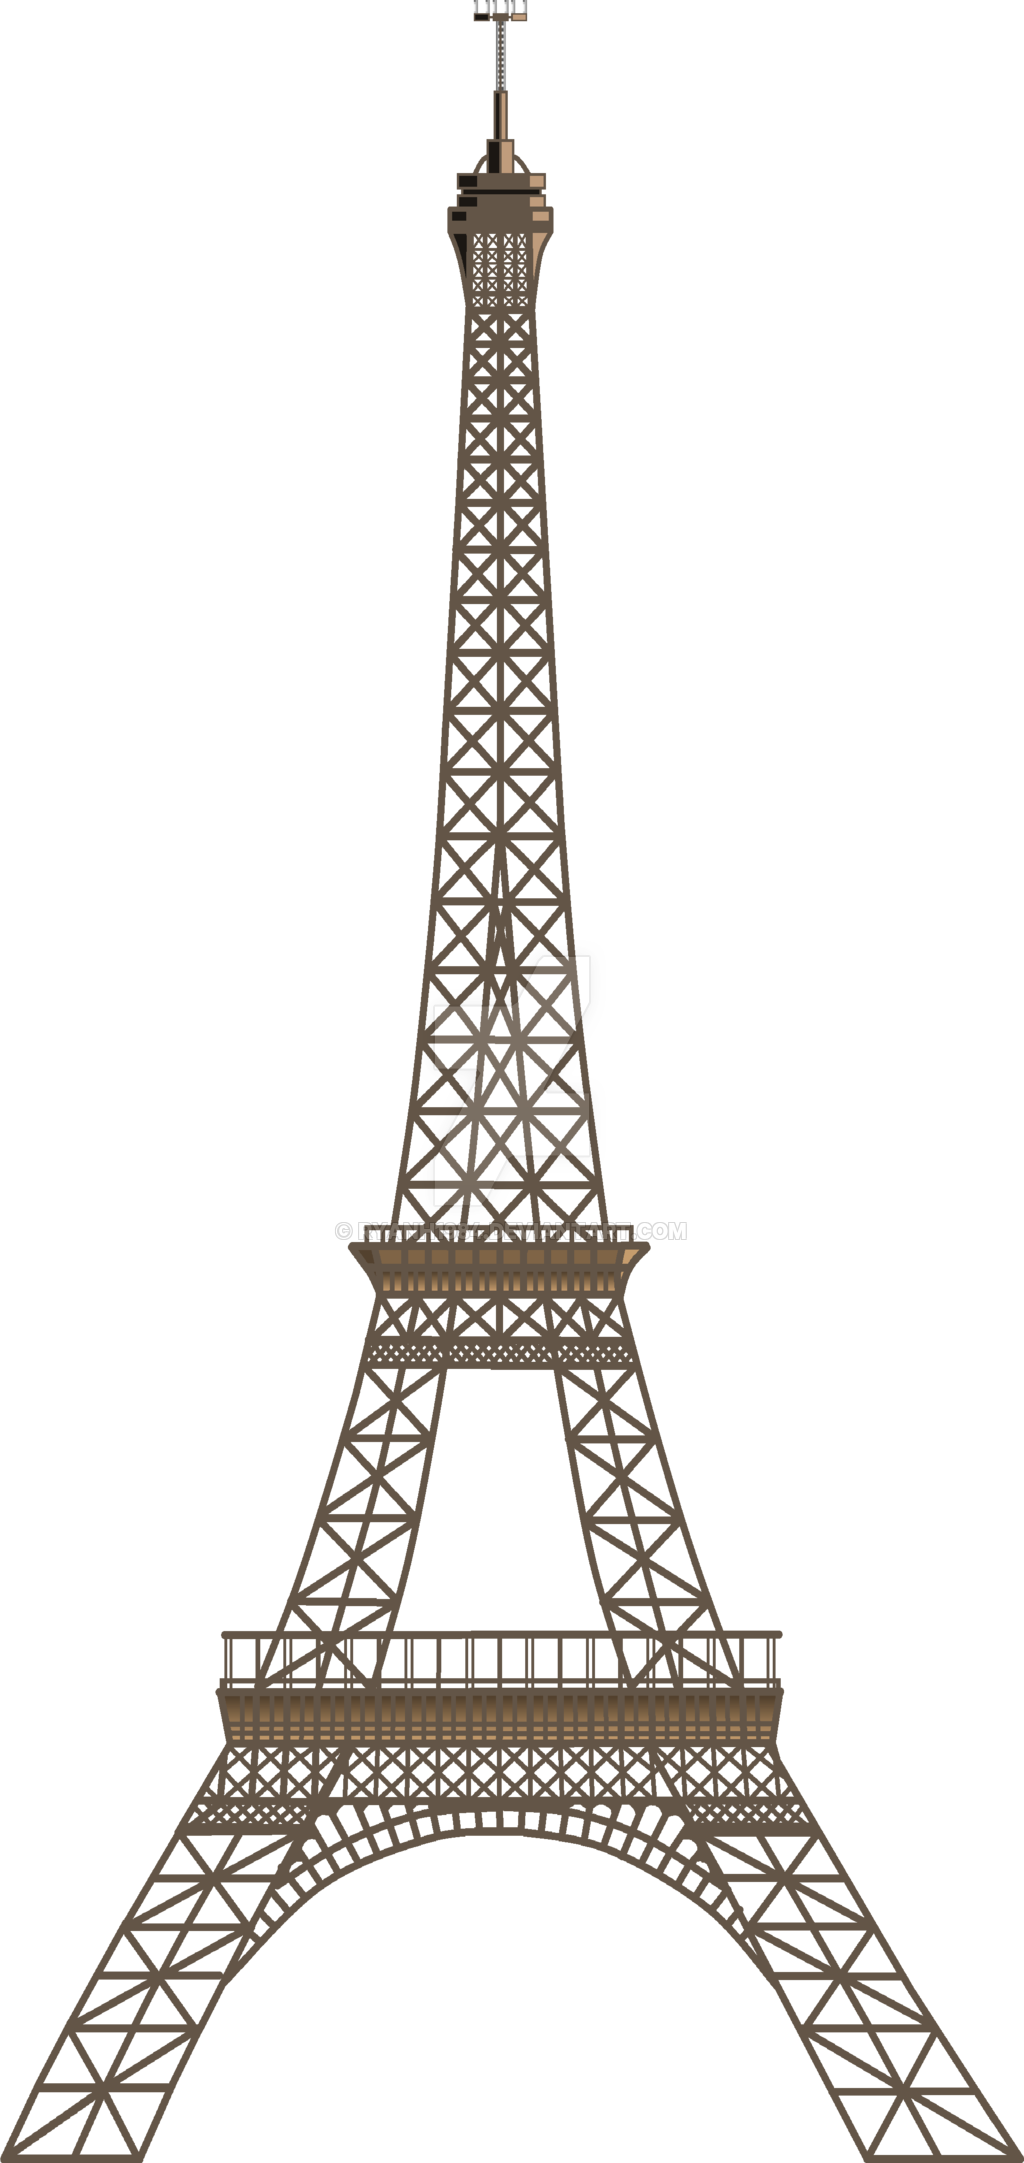 Eiffel Tower Backgrounds, Compatible - PC, Mobile, Gadgets| 1024x2163 px